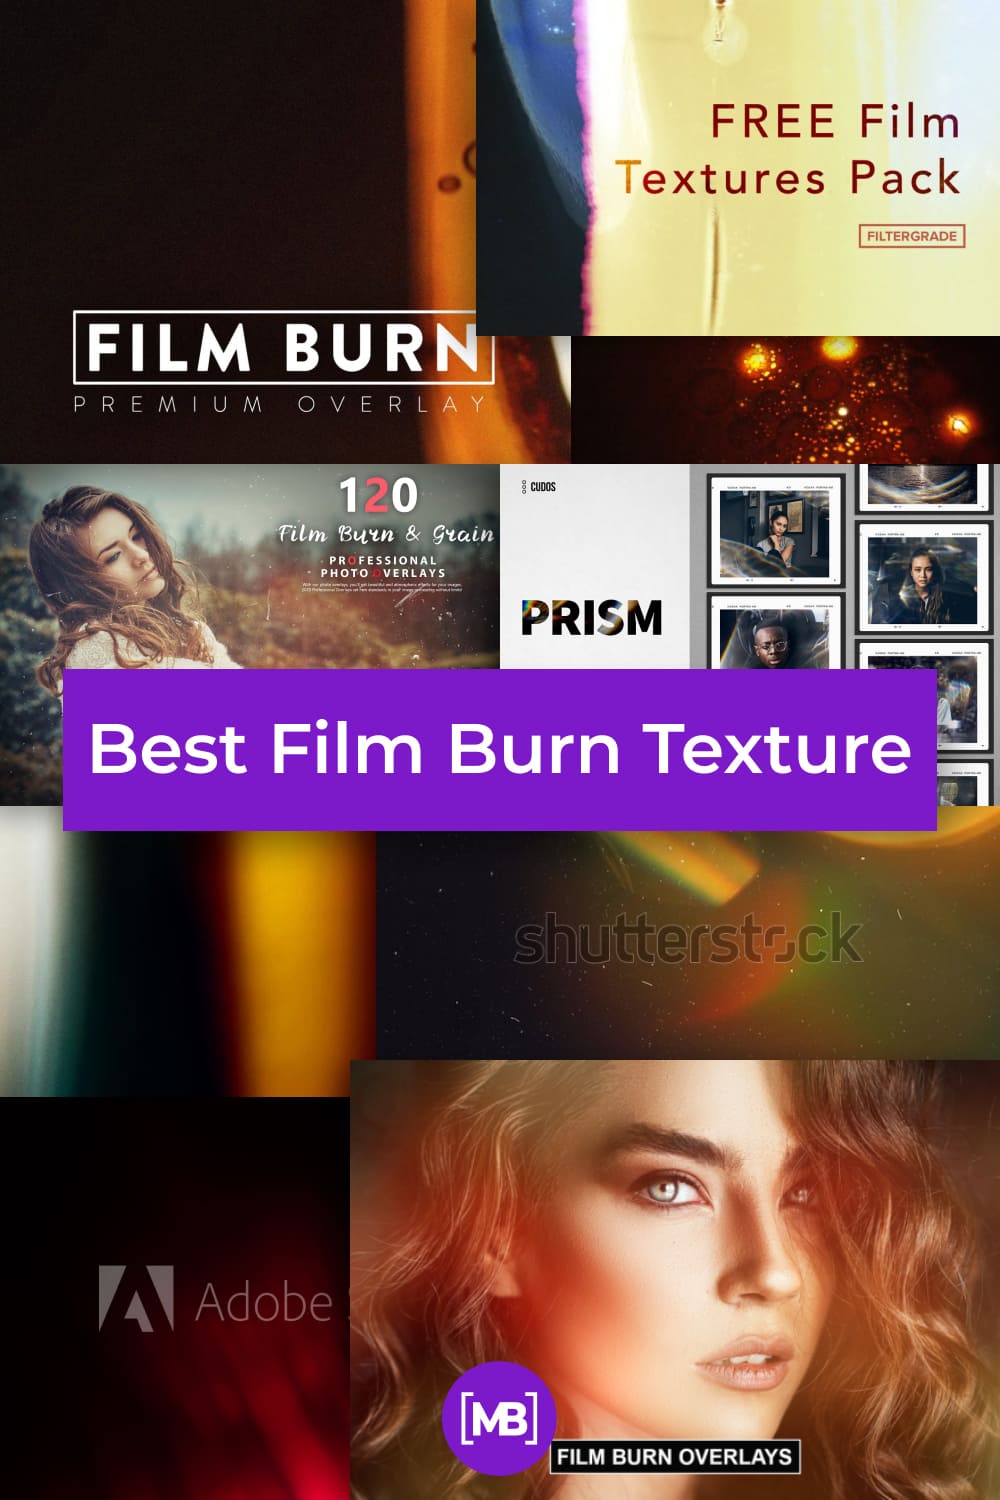 Film Burn Texture Pinterest.